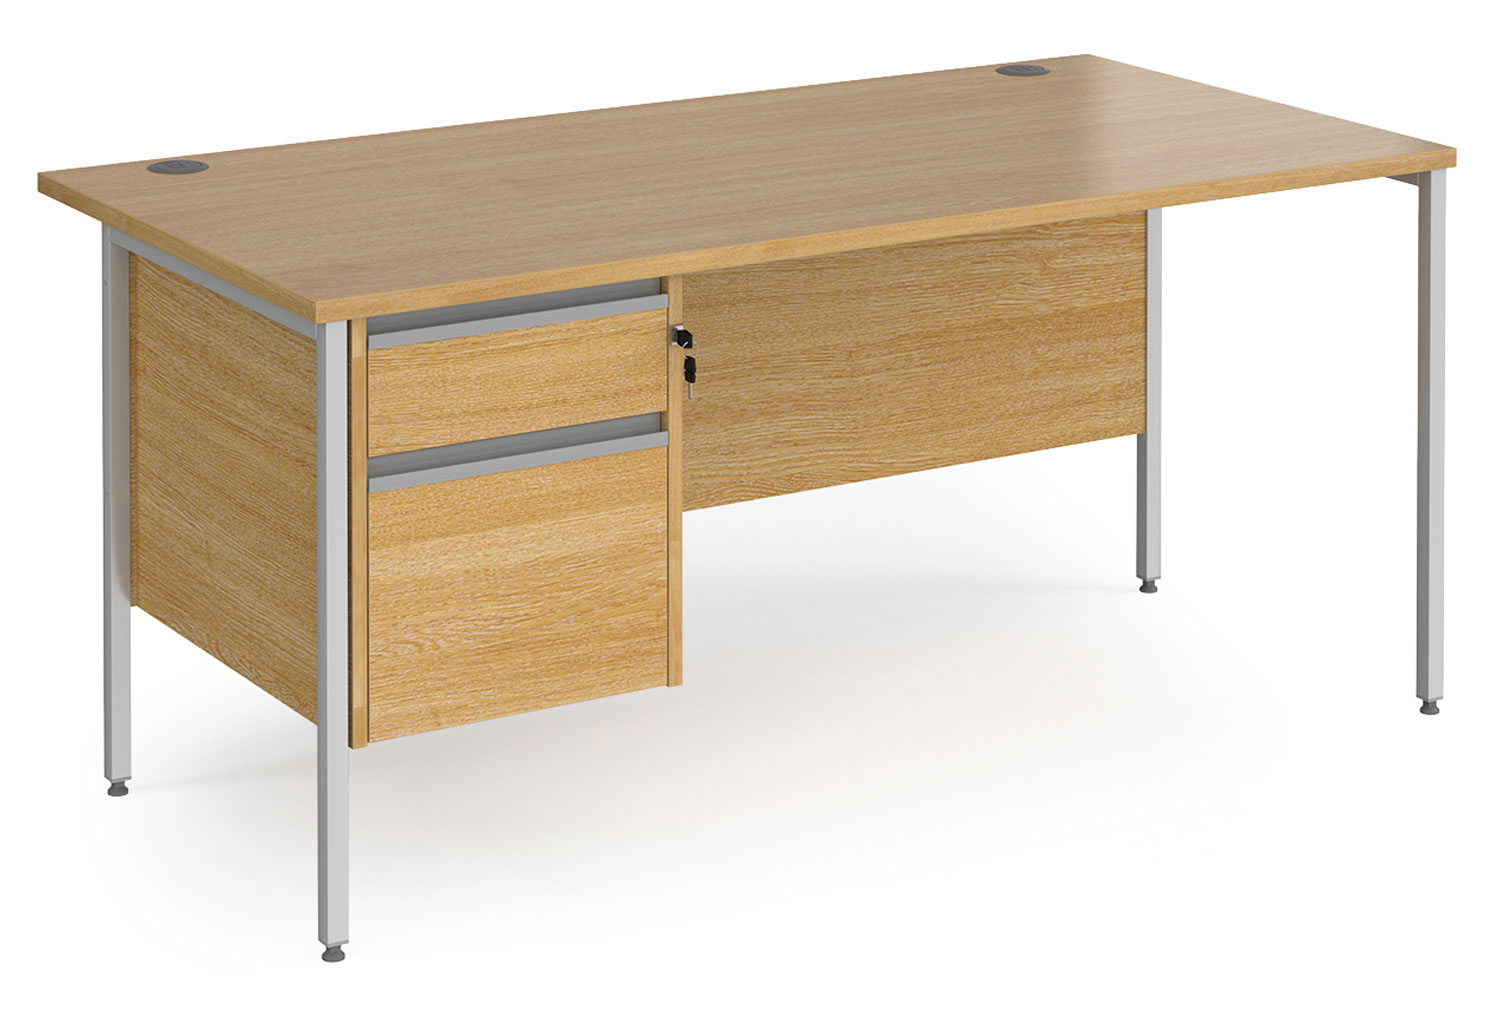 Value Line Classic+ Rectangular H-Leg Office Desk 2 Drawers (Silver Leg), 160wx80dx73h (cm), Oak